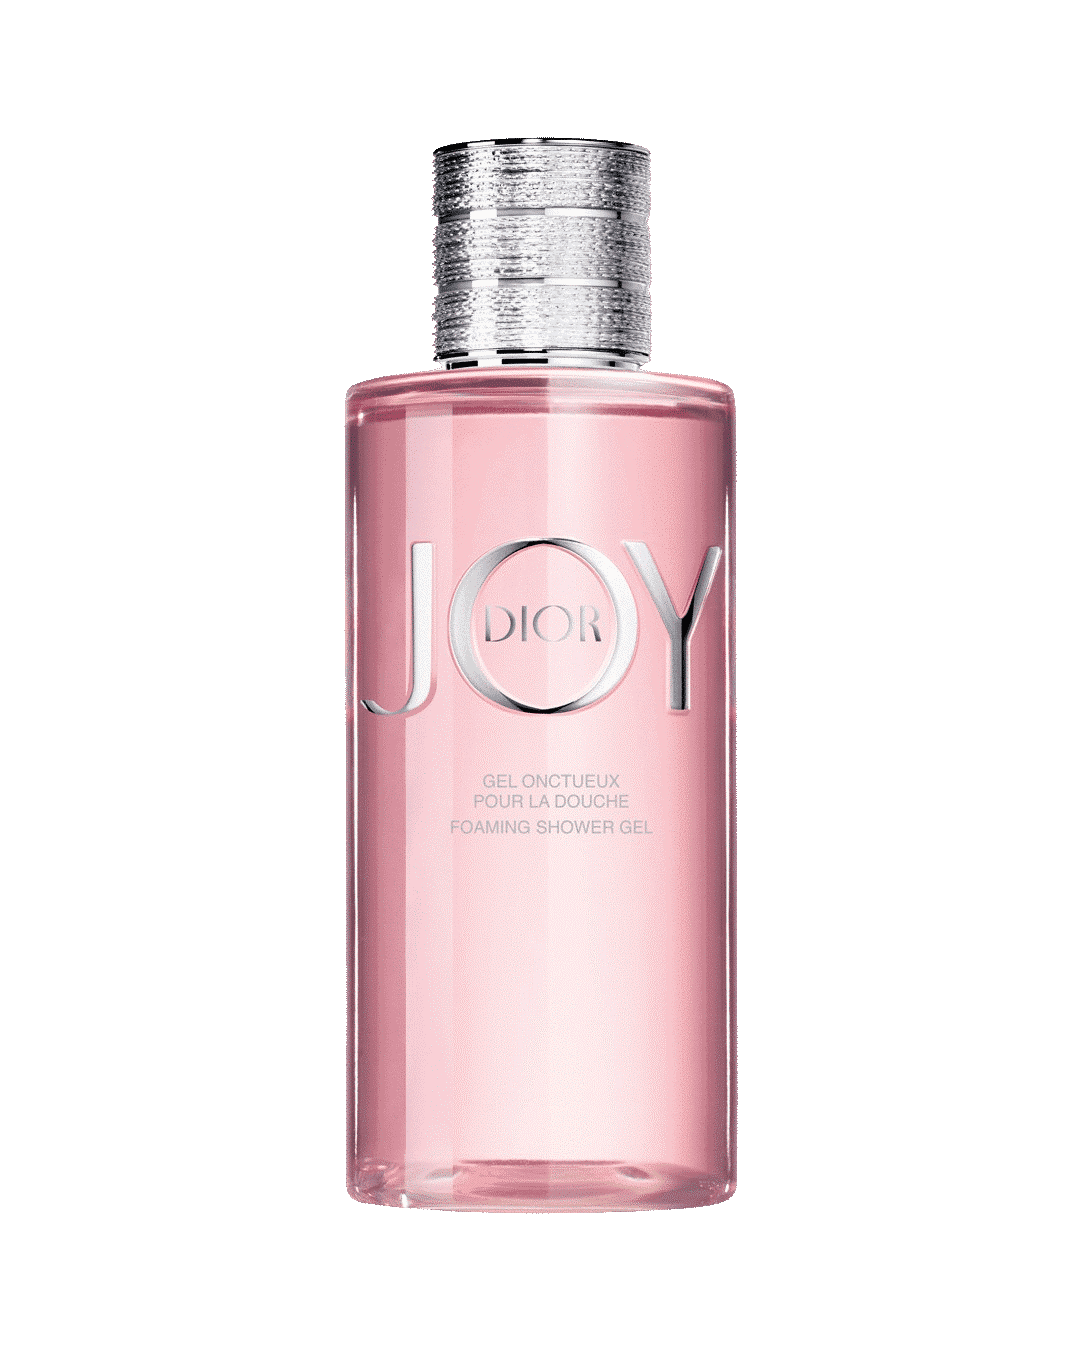 Dior joy foaming shower gel